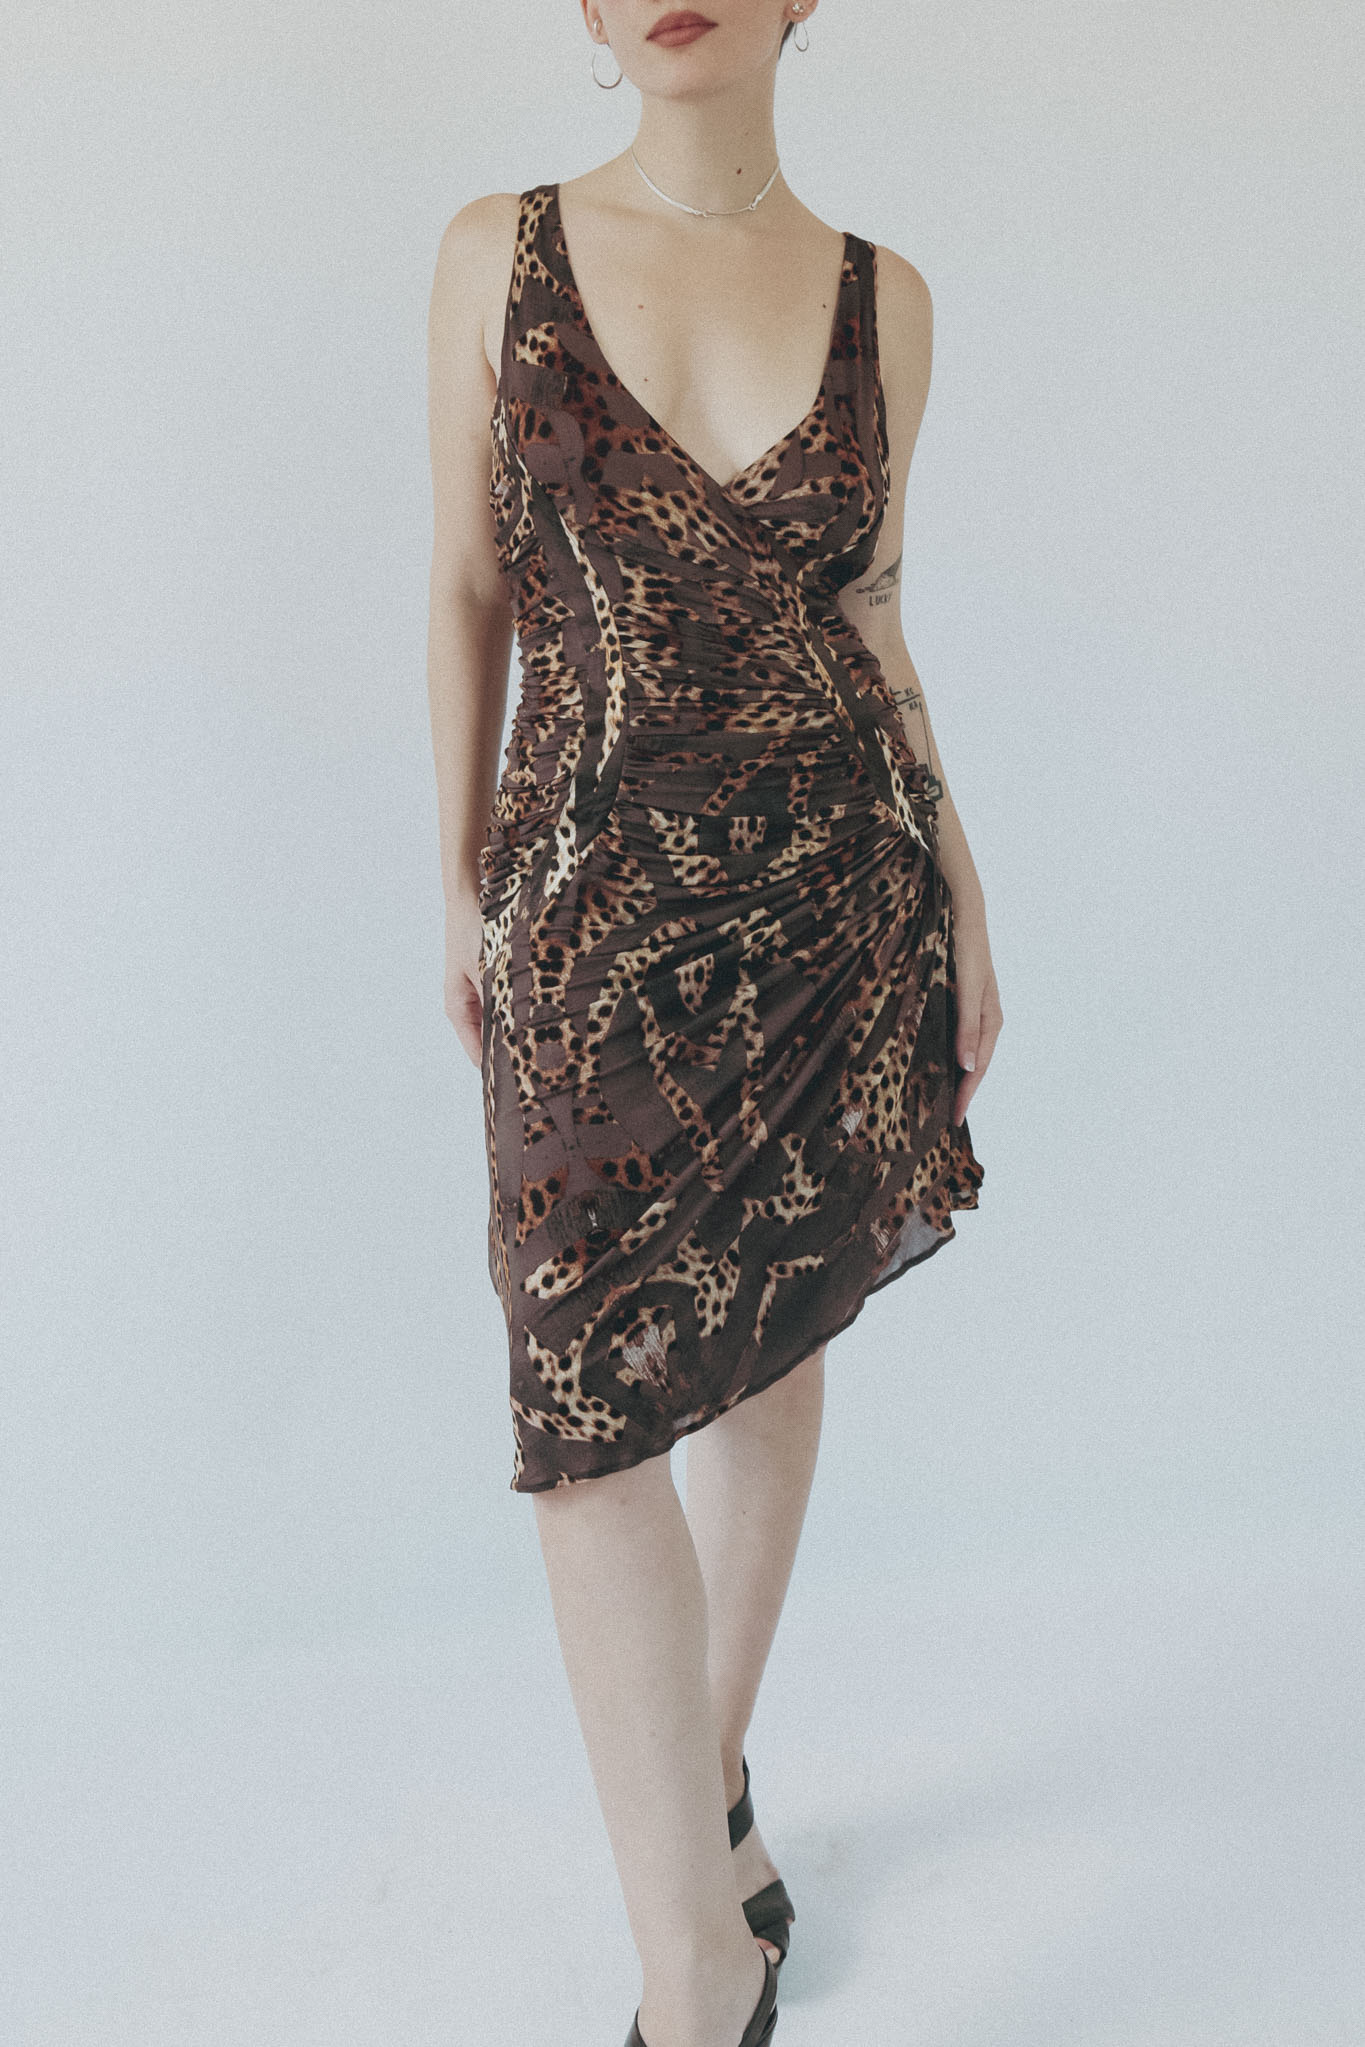 Roberto Cavalli Leopard Ruched Dress